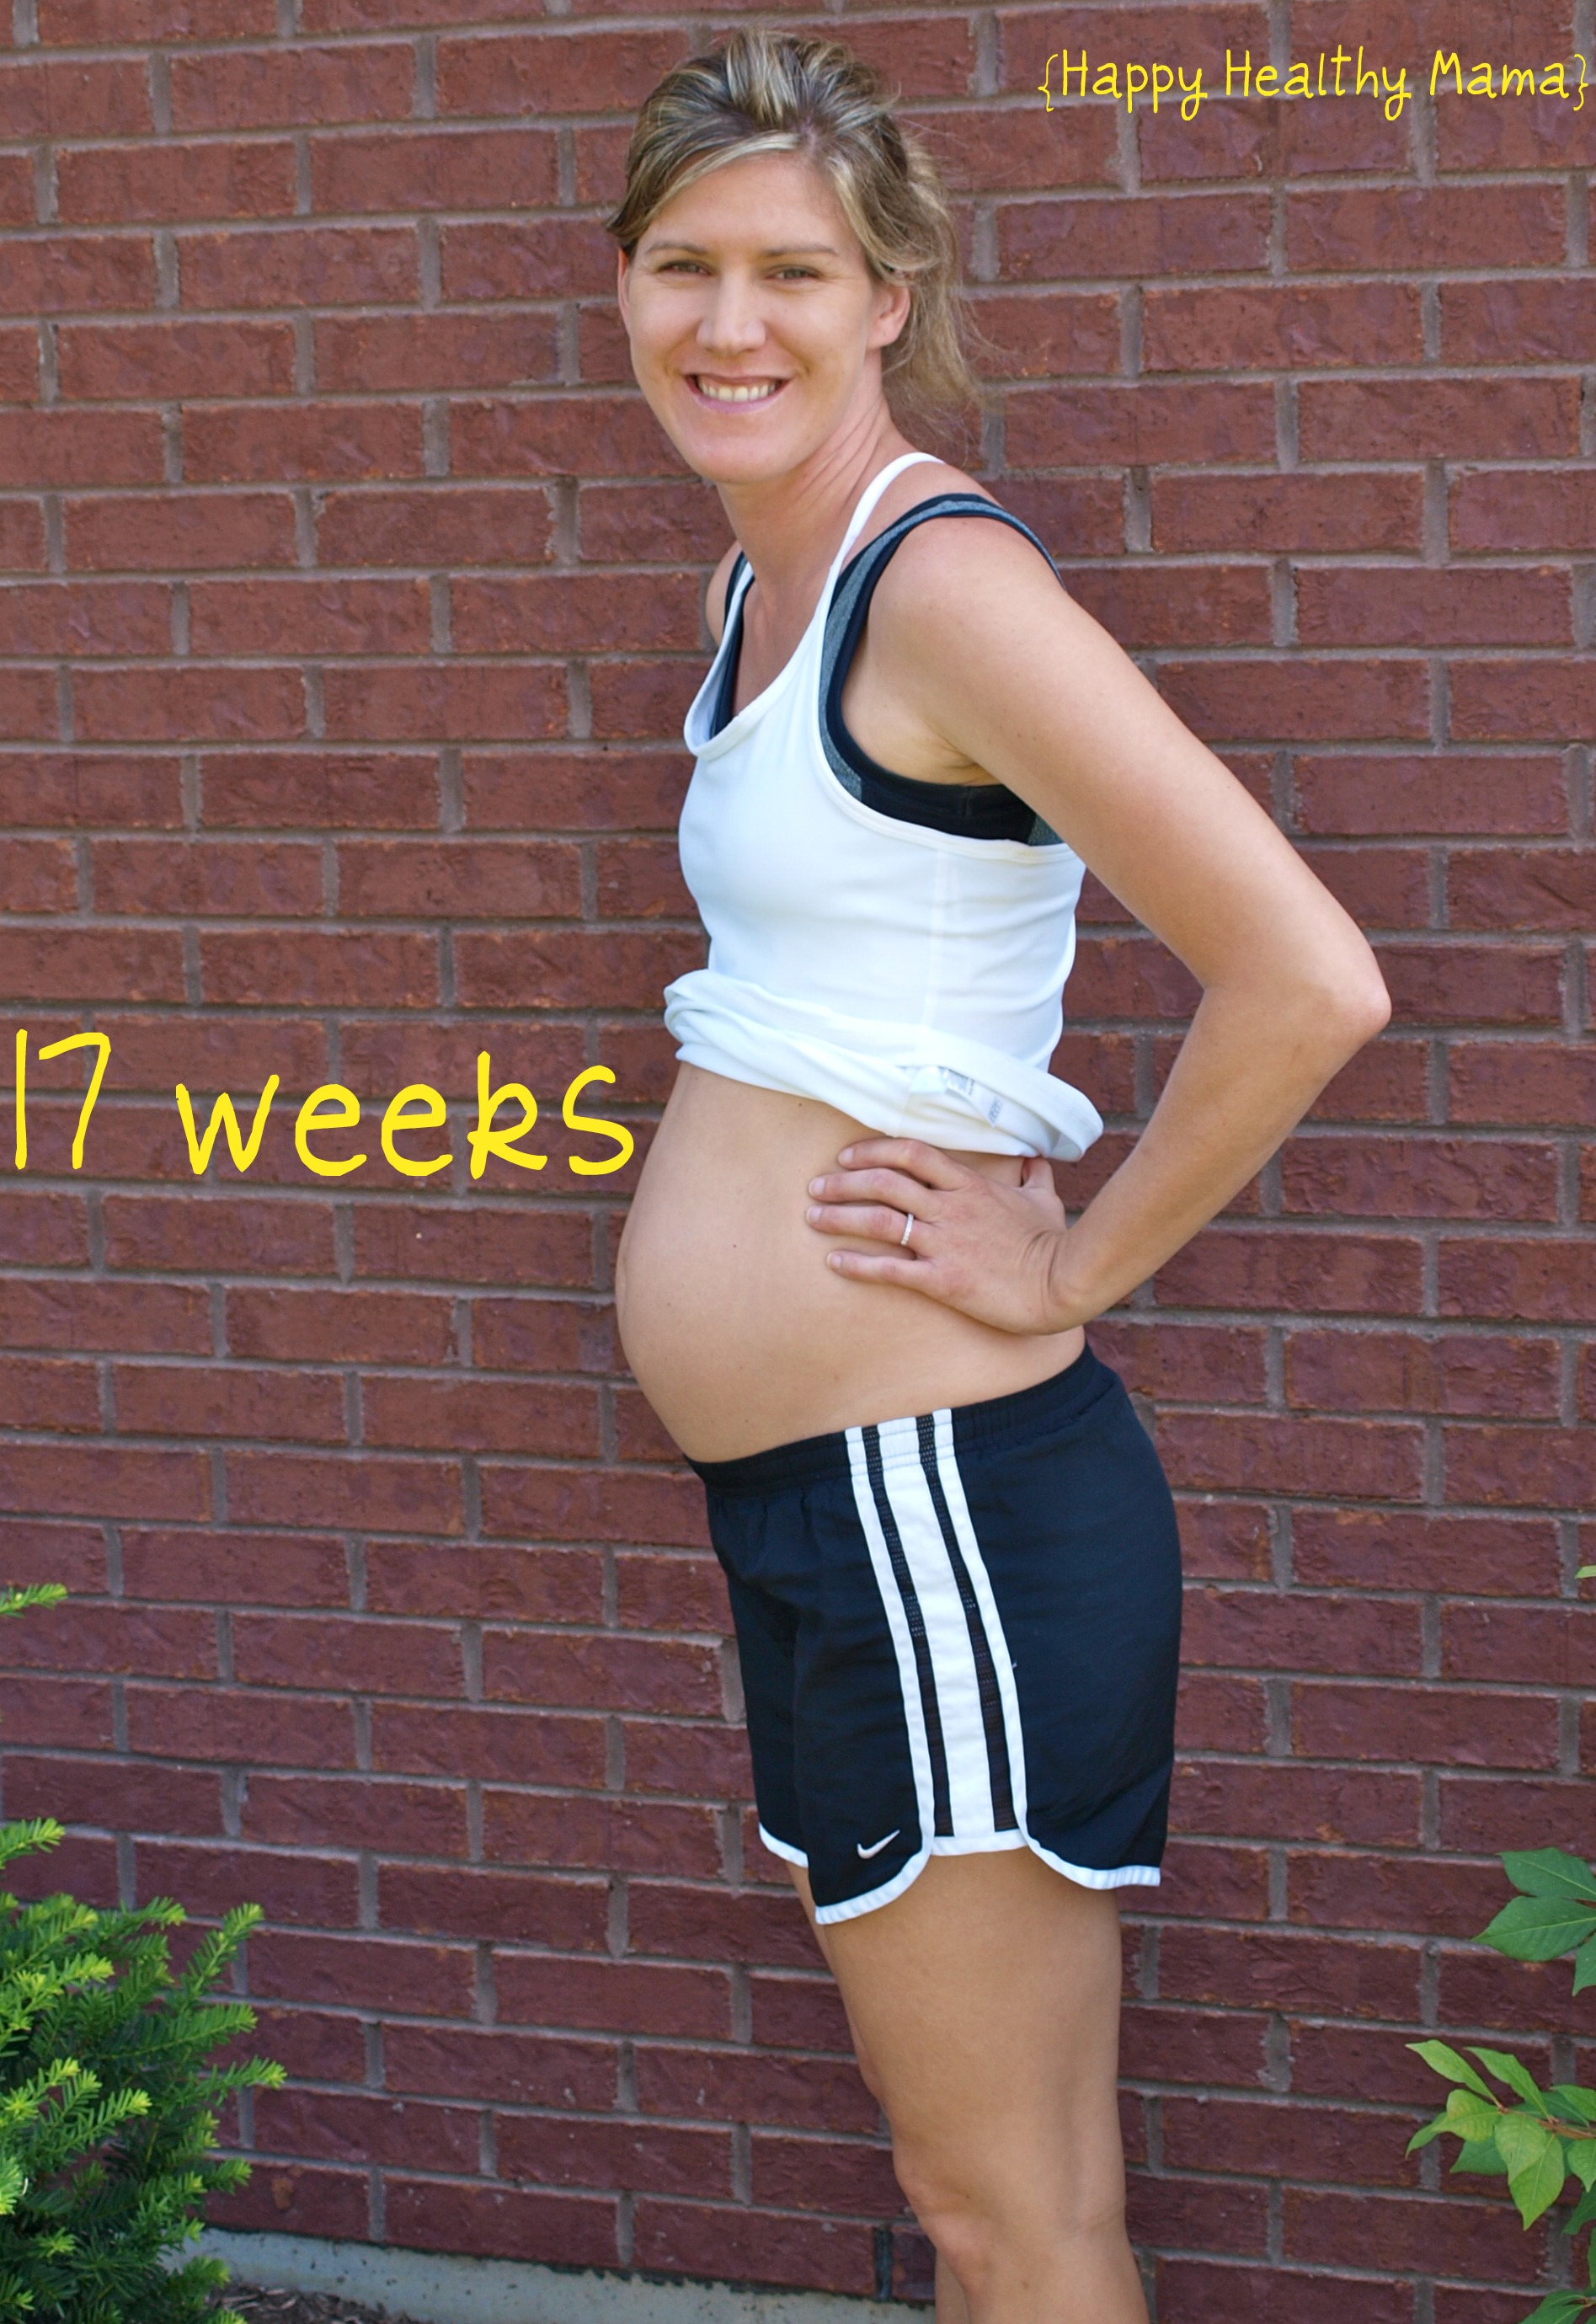 17 Week Pregnant Baby Development